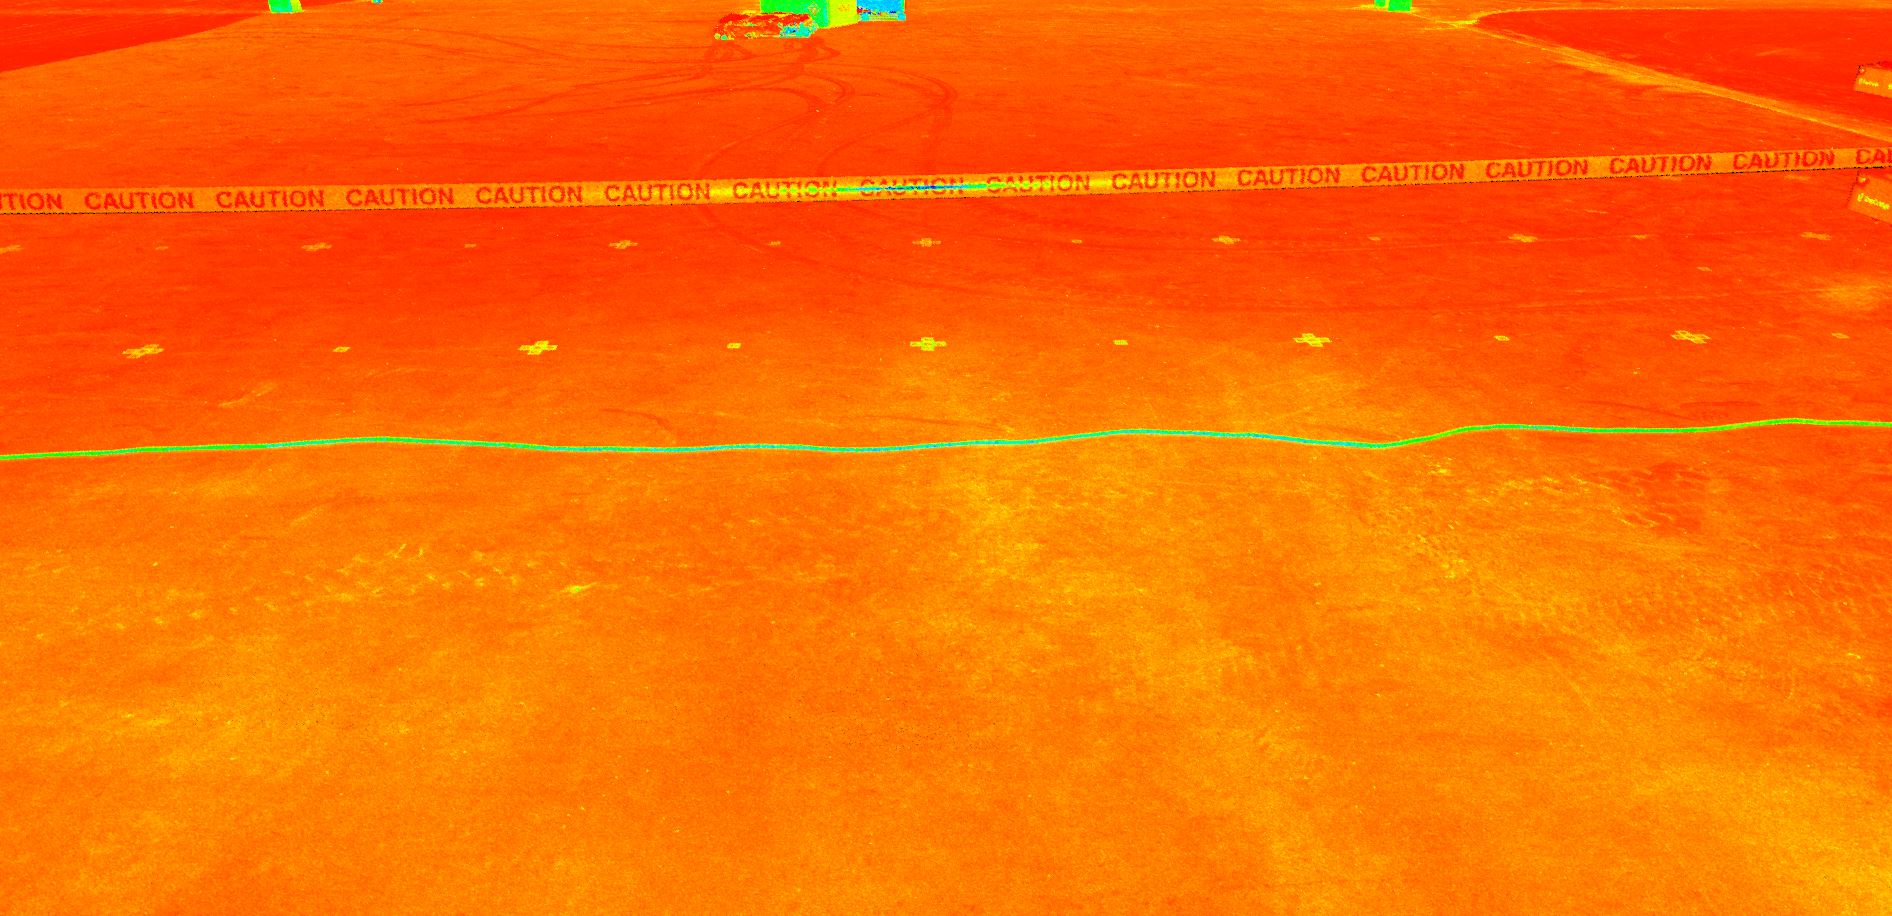 An orange radar scan image of the floor of a warehouse.